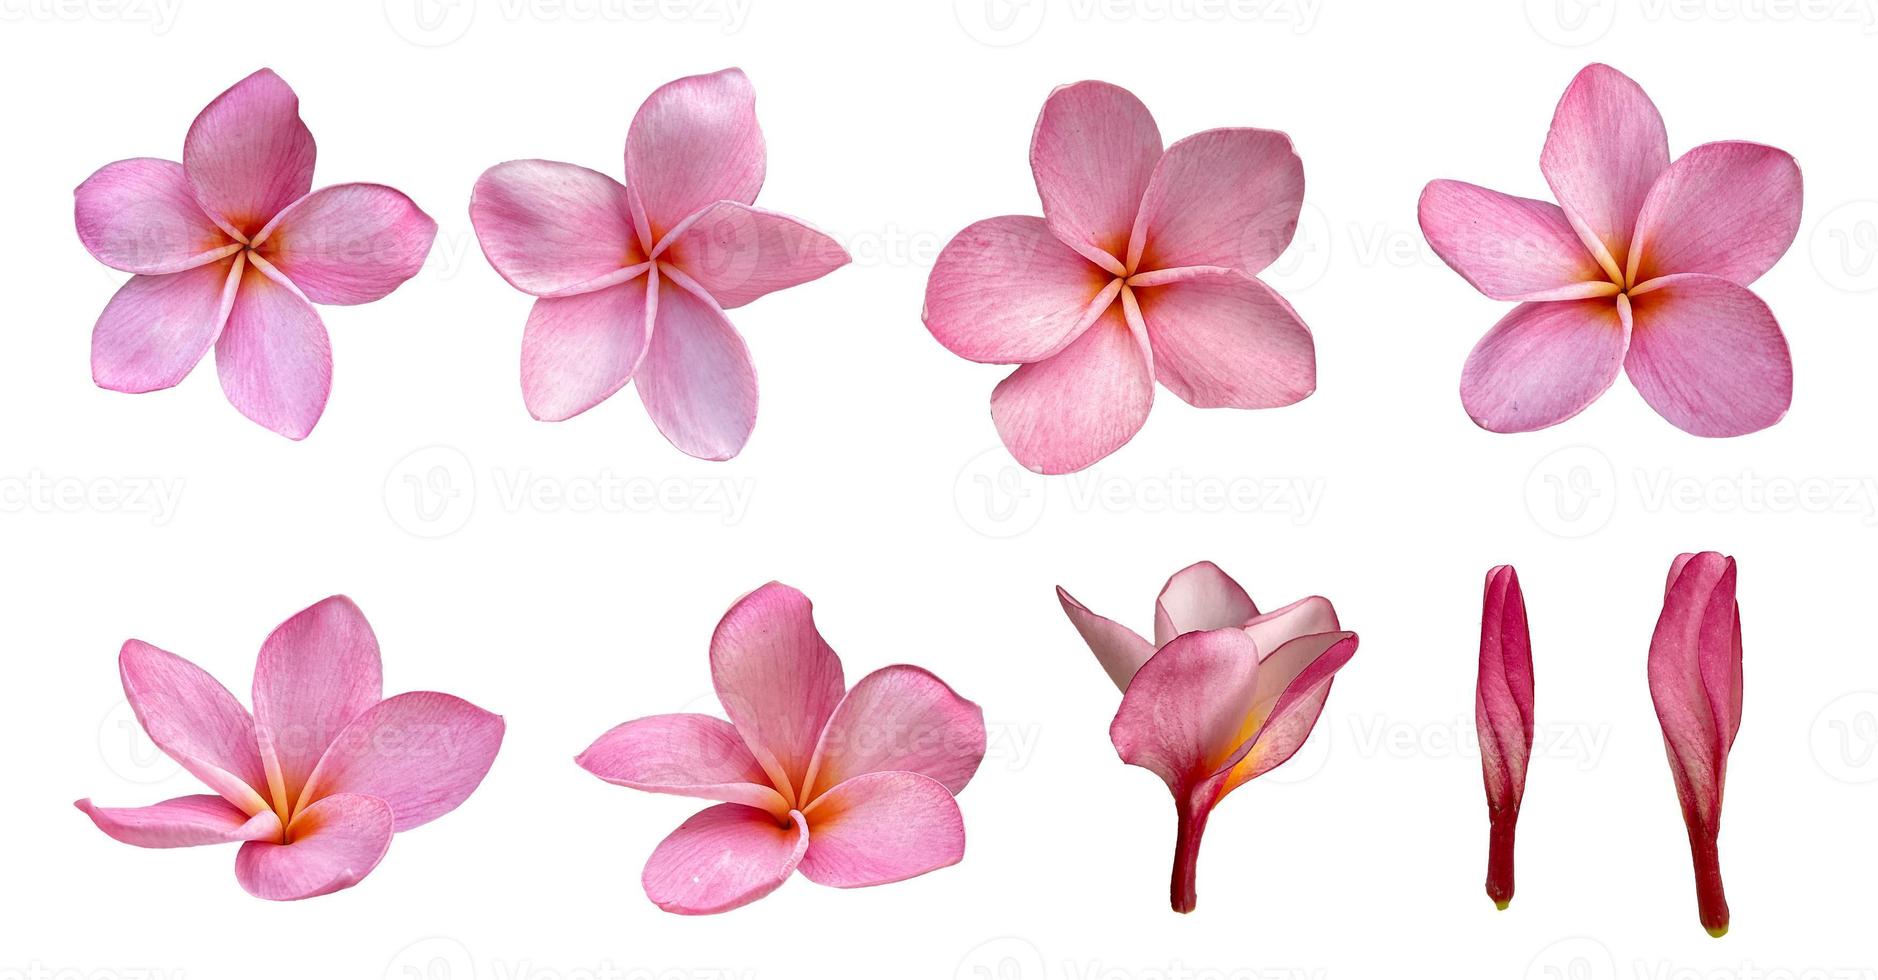 rosa plumeria blomma eller frangipani blomma isolerade vit bakgrund foto